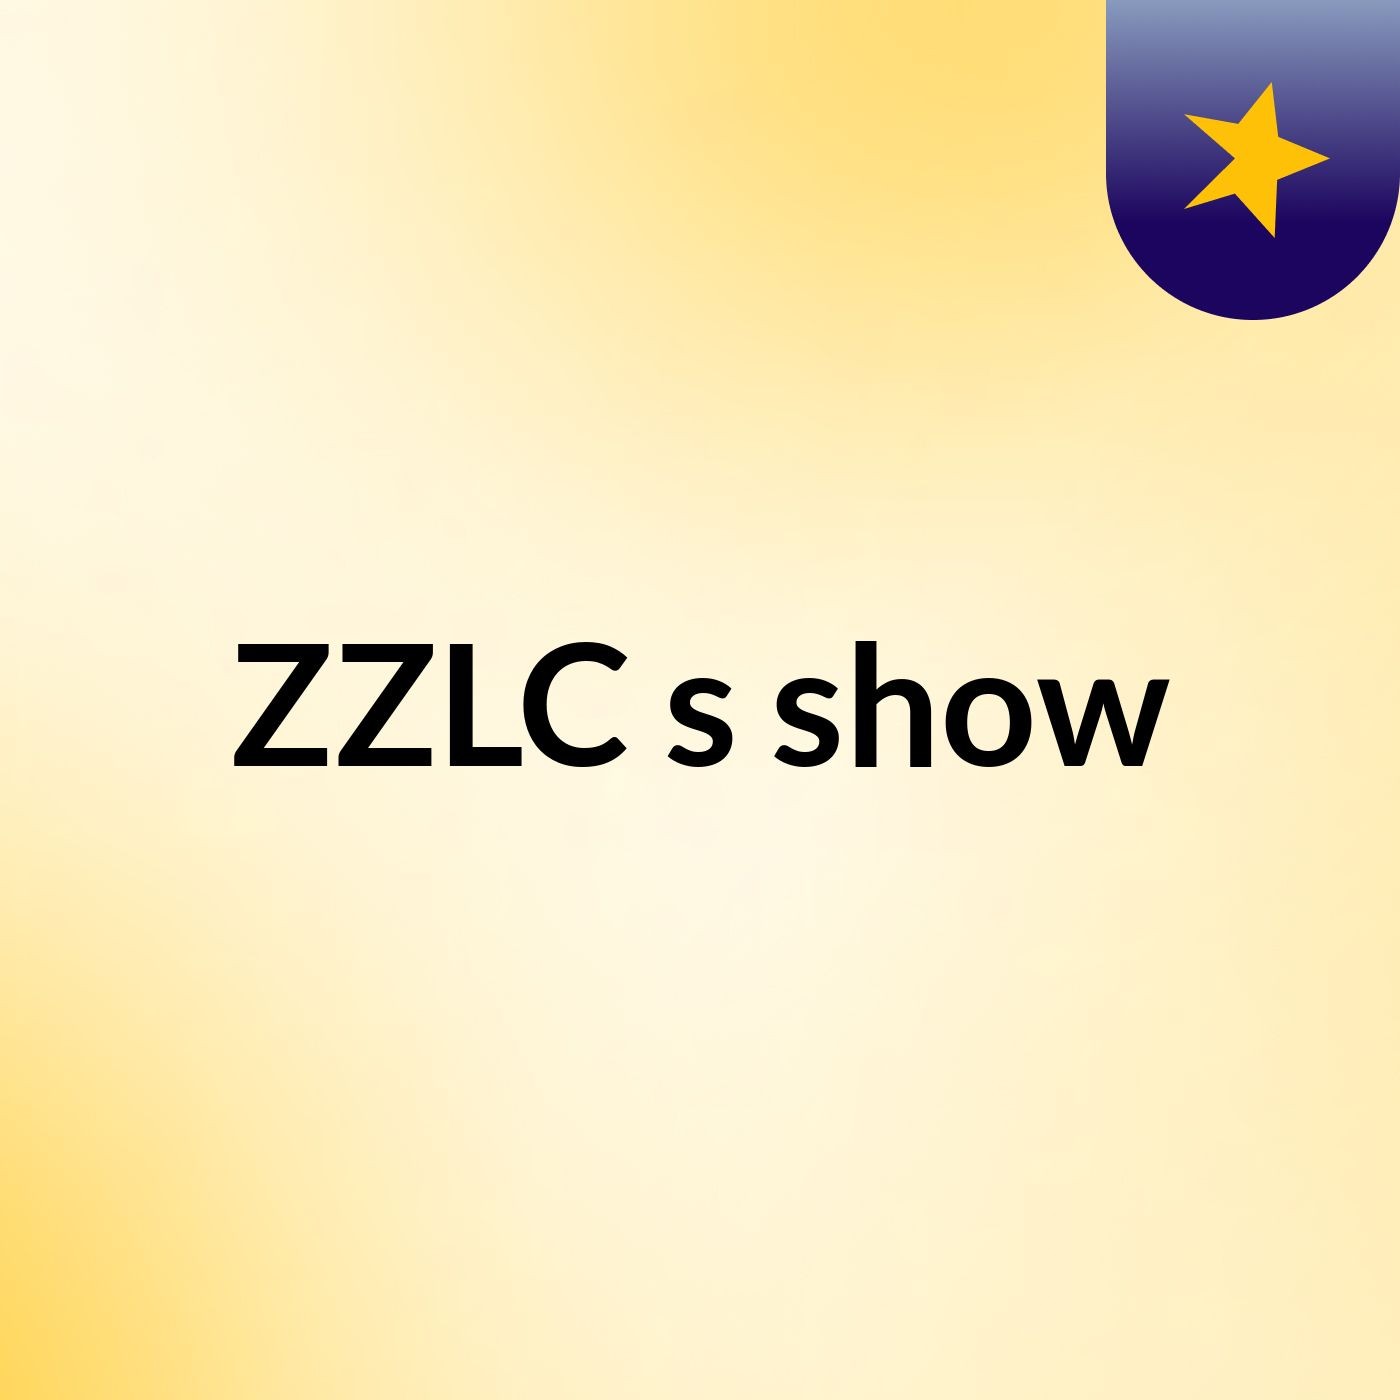 ZZLC's show